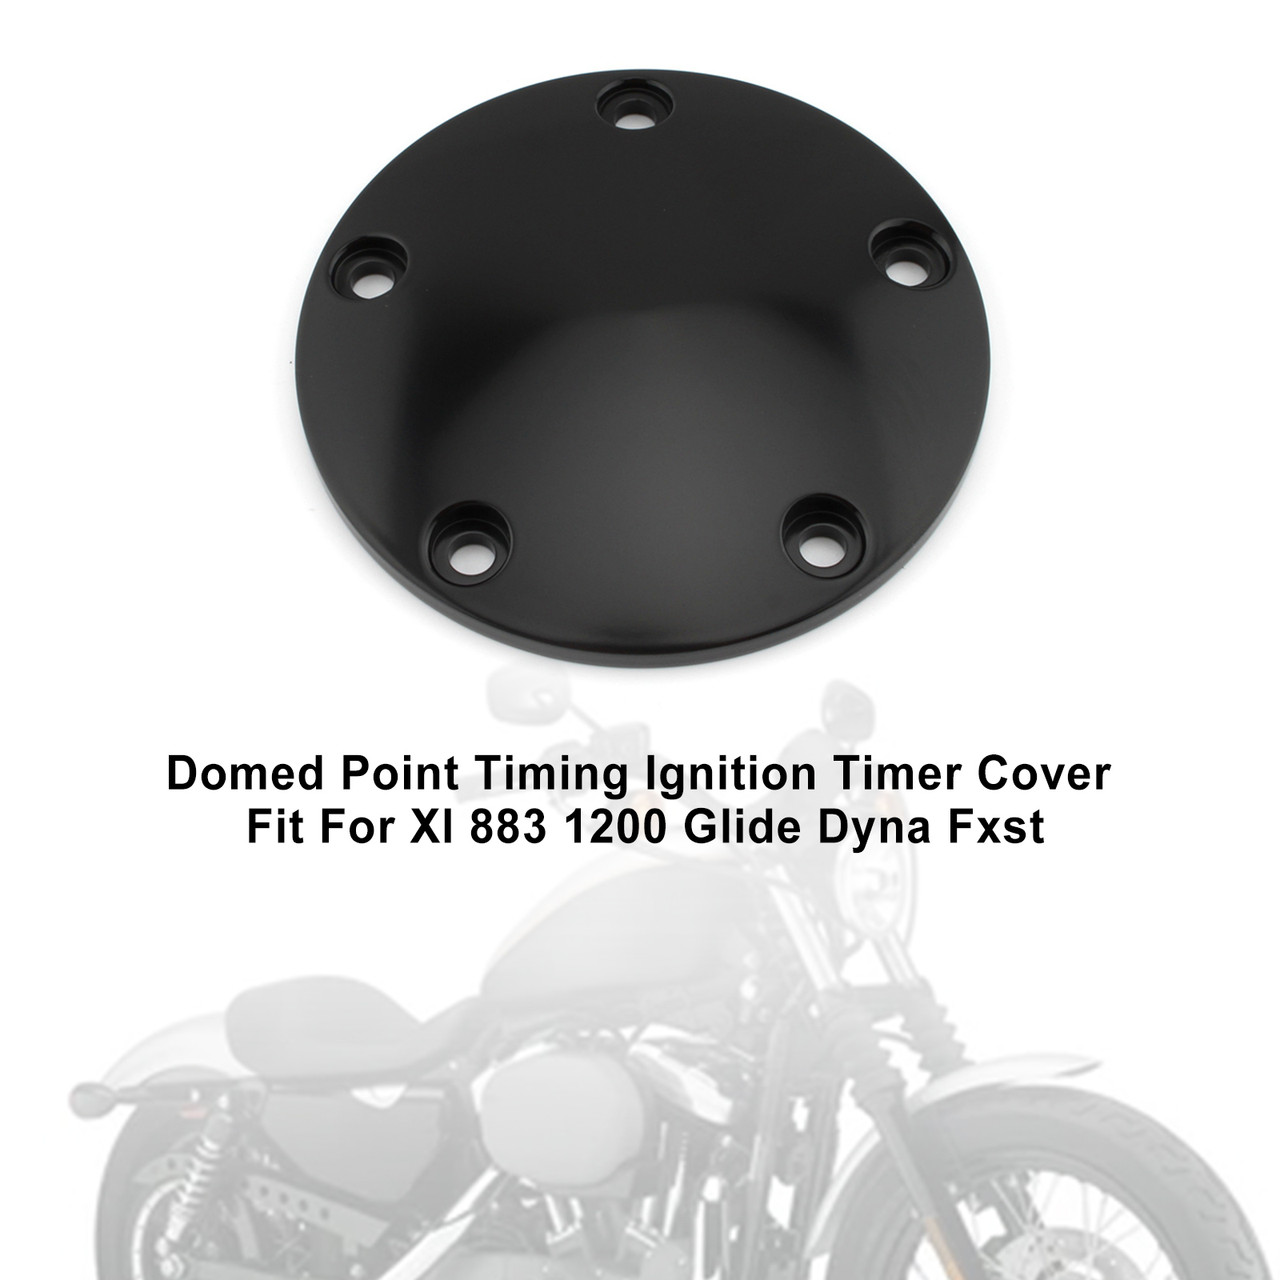 Timing Ignition Timer Cover Domed Point Black For Fltr Electra Glide Dyna Fxst